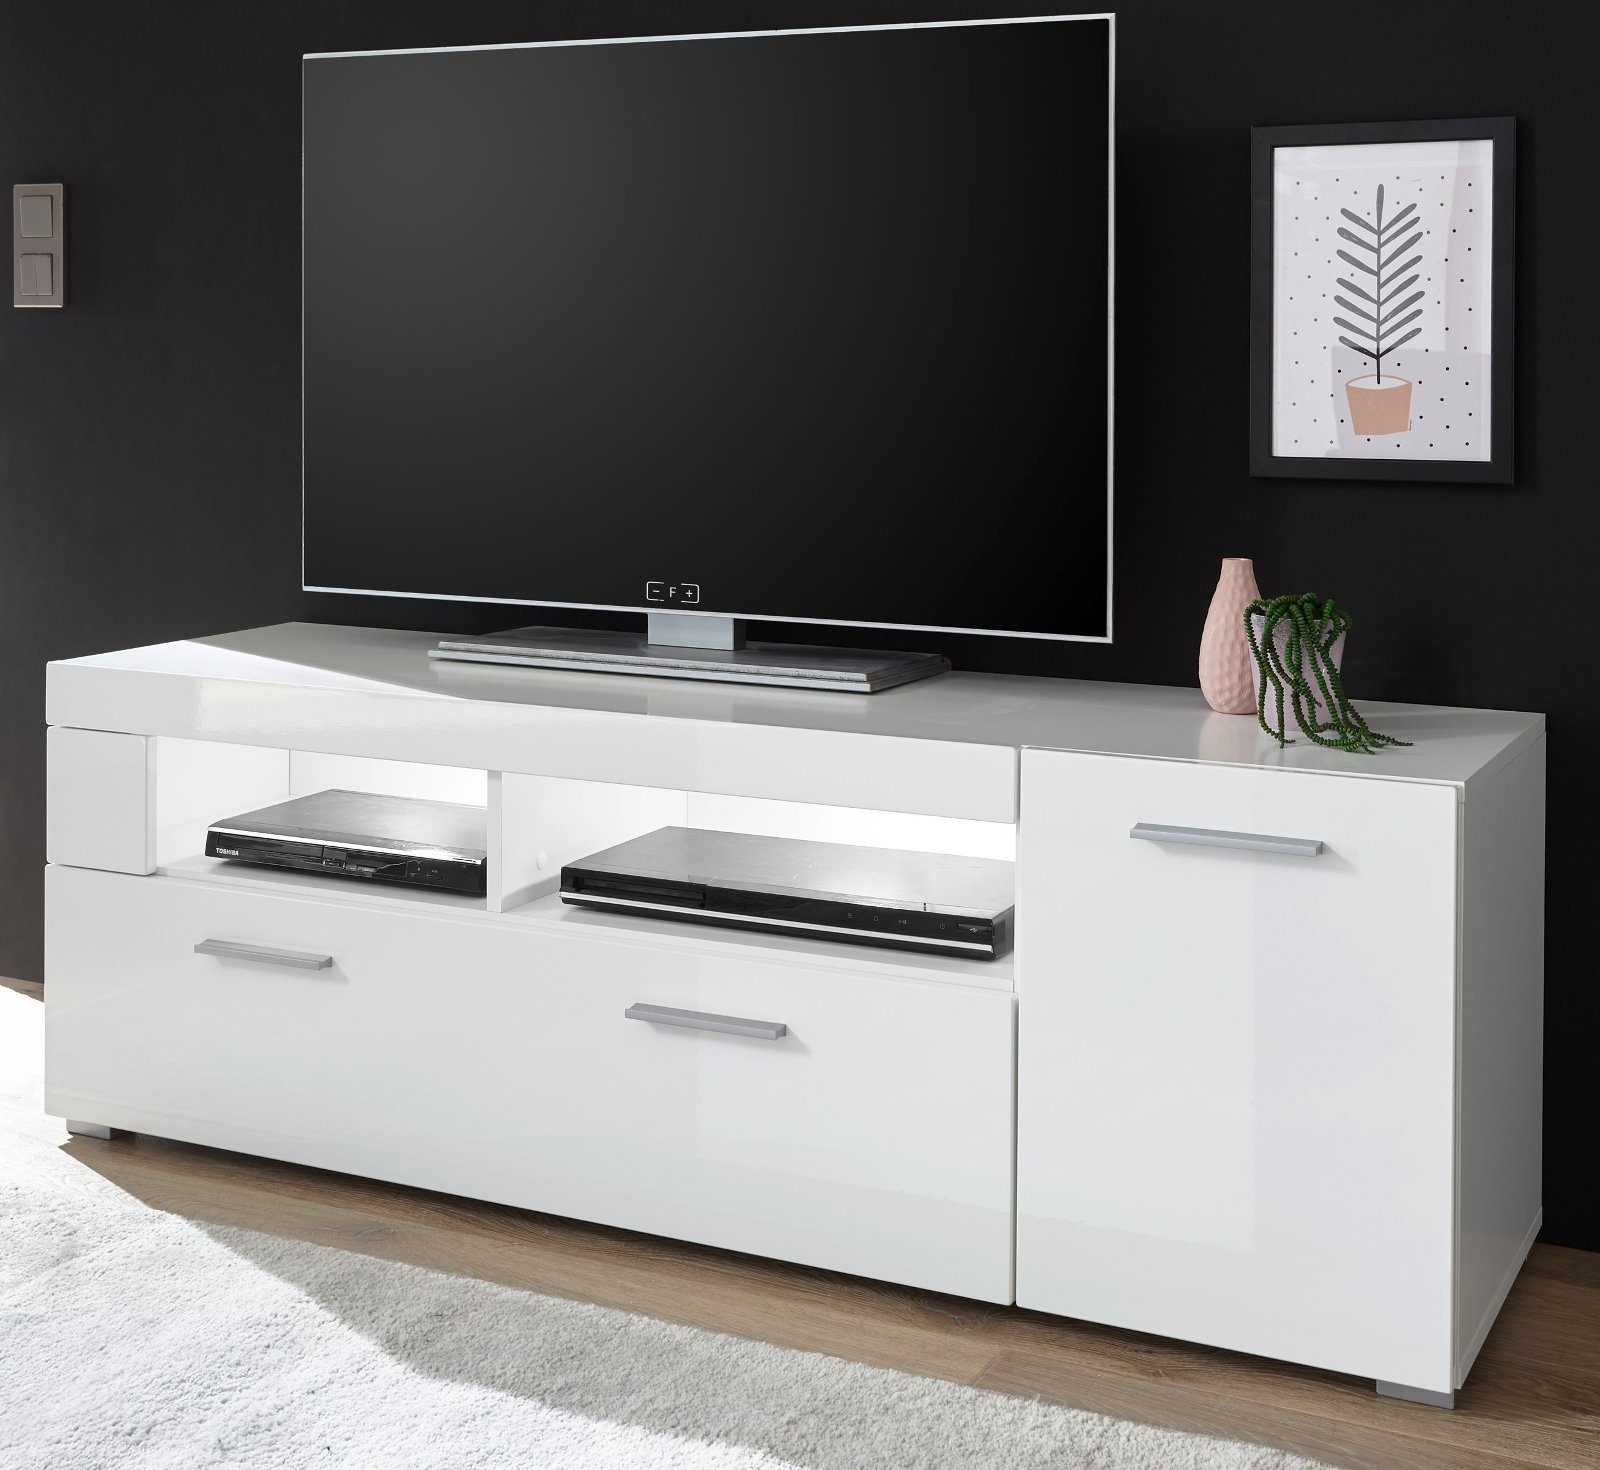 Furn.Design Lowboard Crucero (TV Unterschrank in weiß, ca. 140 x 48 cm),  Hochglanz